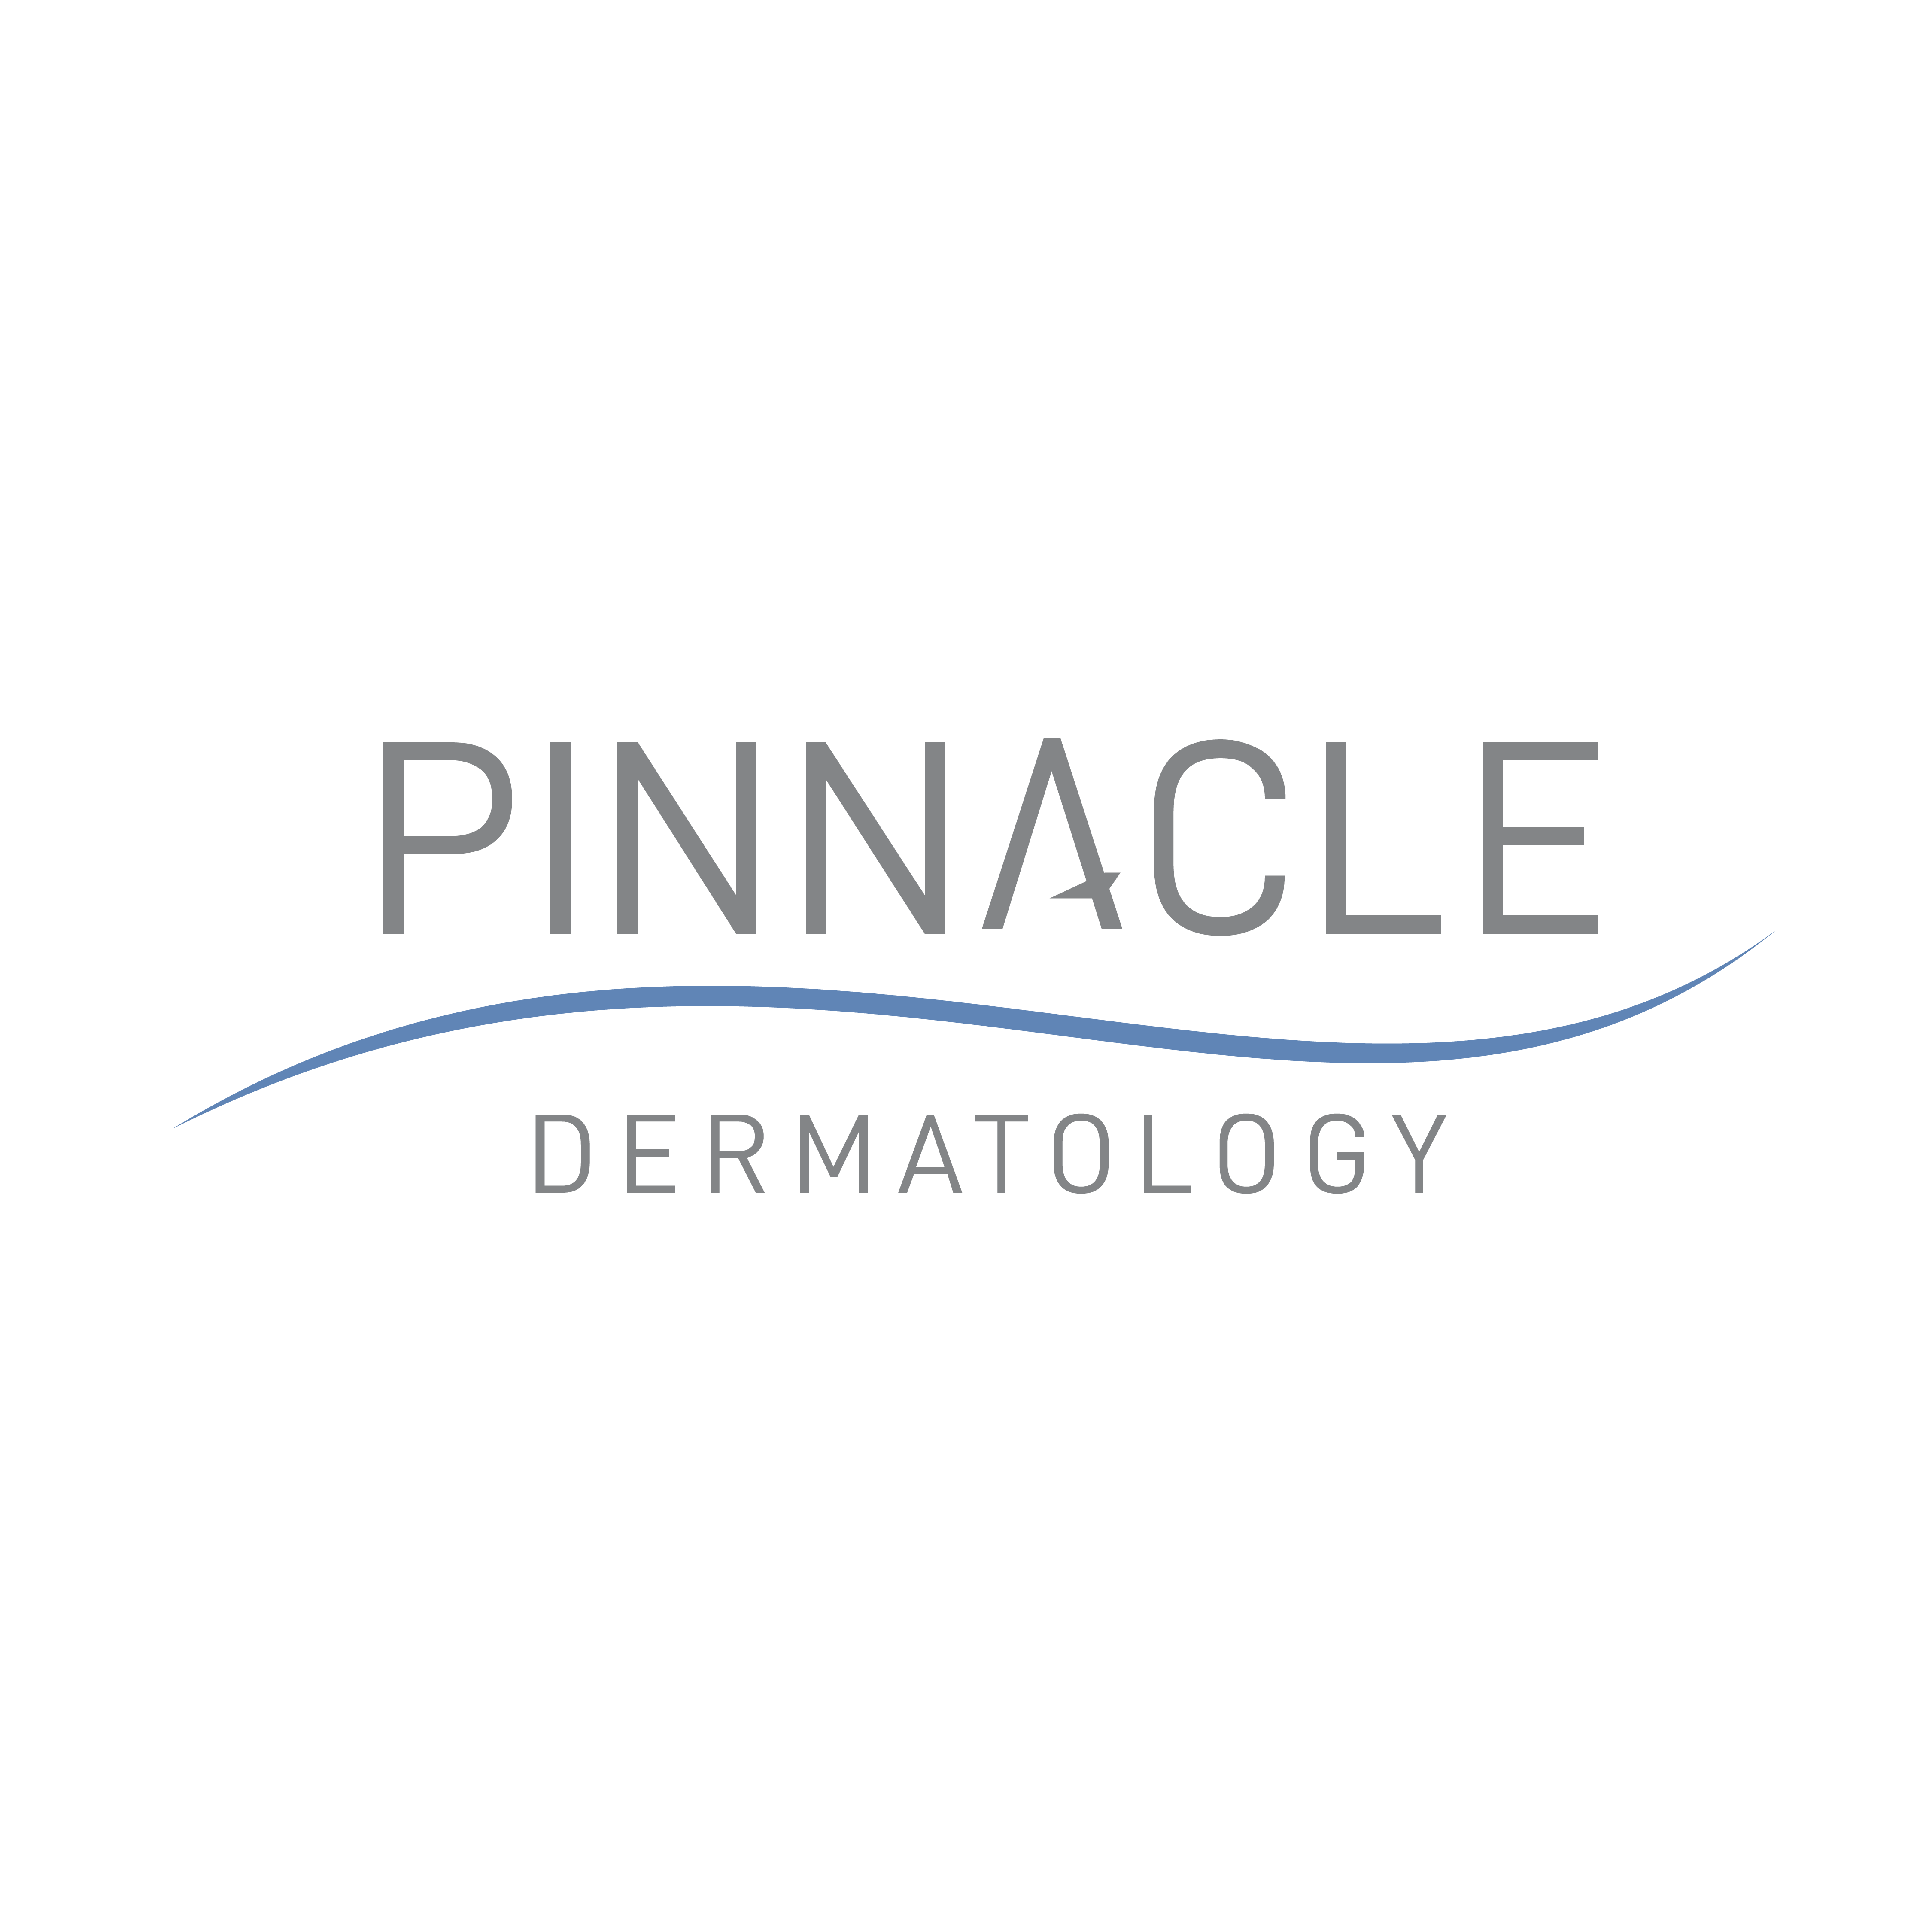 Pinnacle Dermatology  - Scottsdale - Scottsdale, AZ 85258 - (480)948-8400 | ShowMeLocal.com